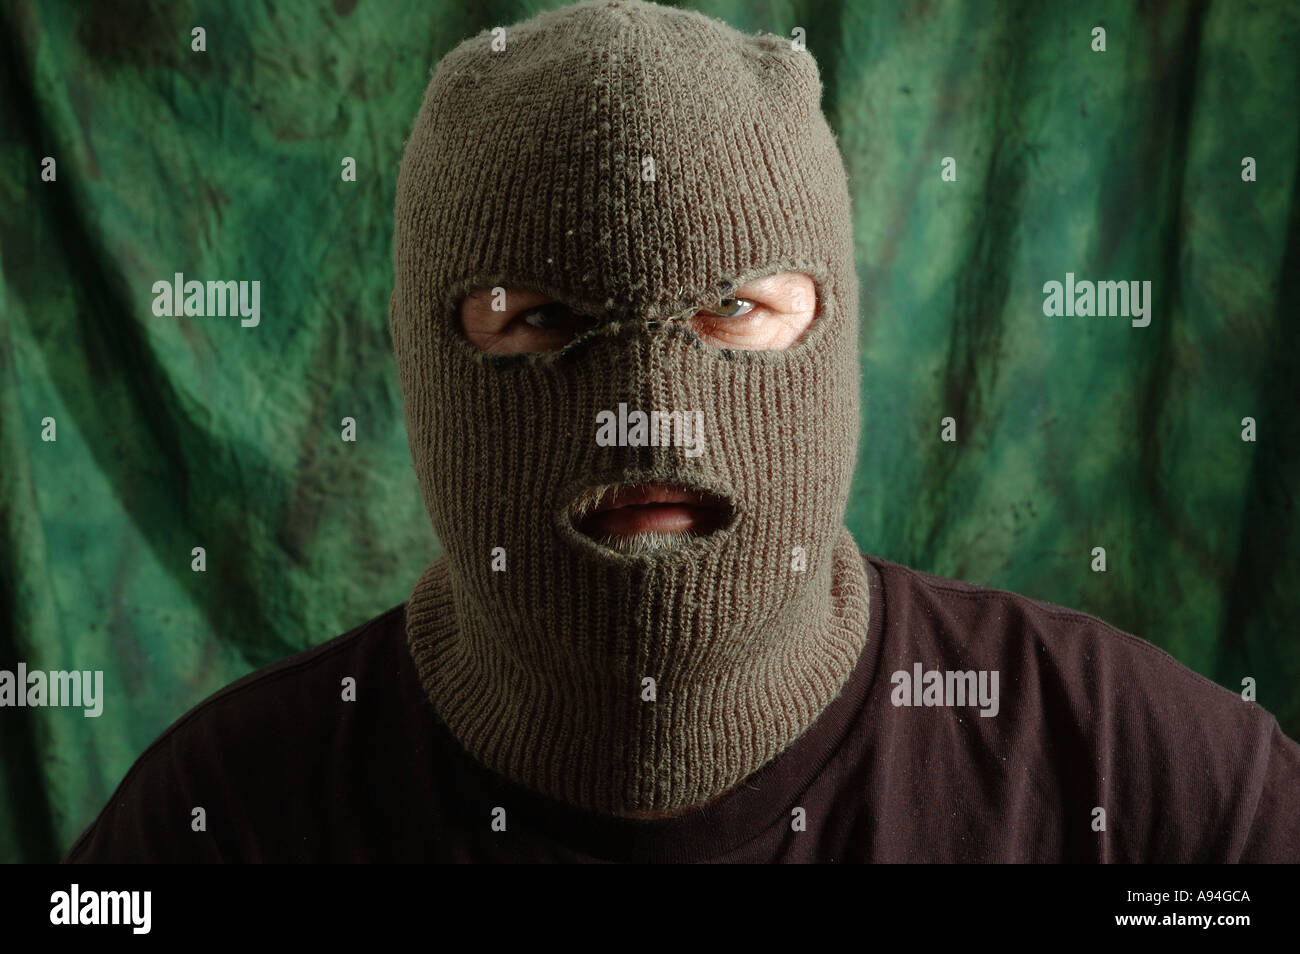 scary man in balaclava ski mask dsca 4183 Stock Photo - Alamy